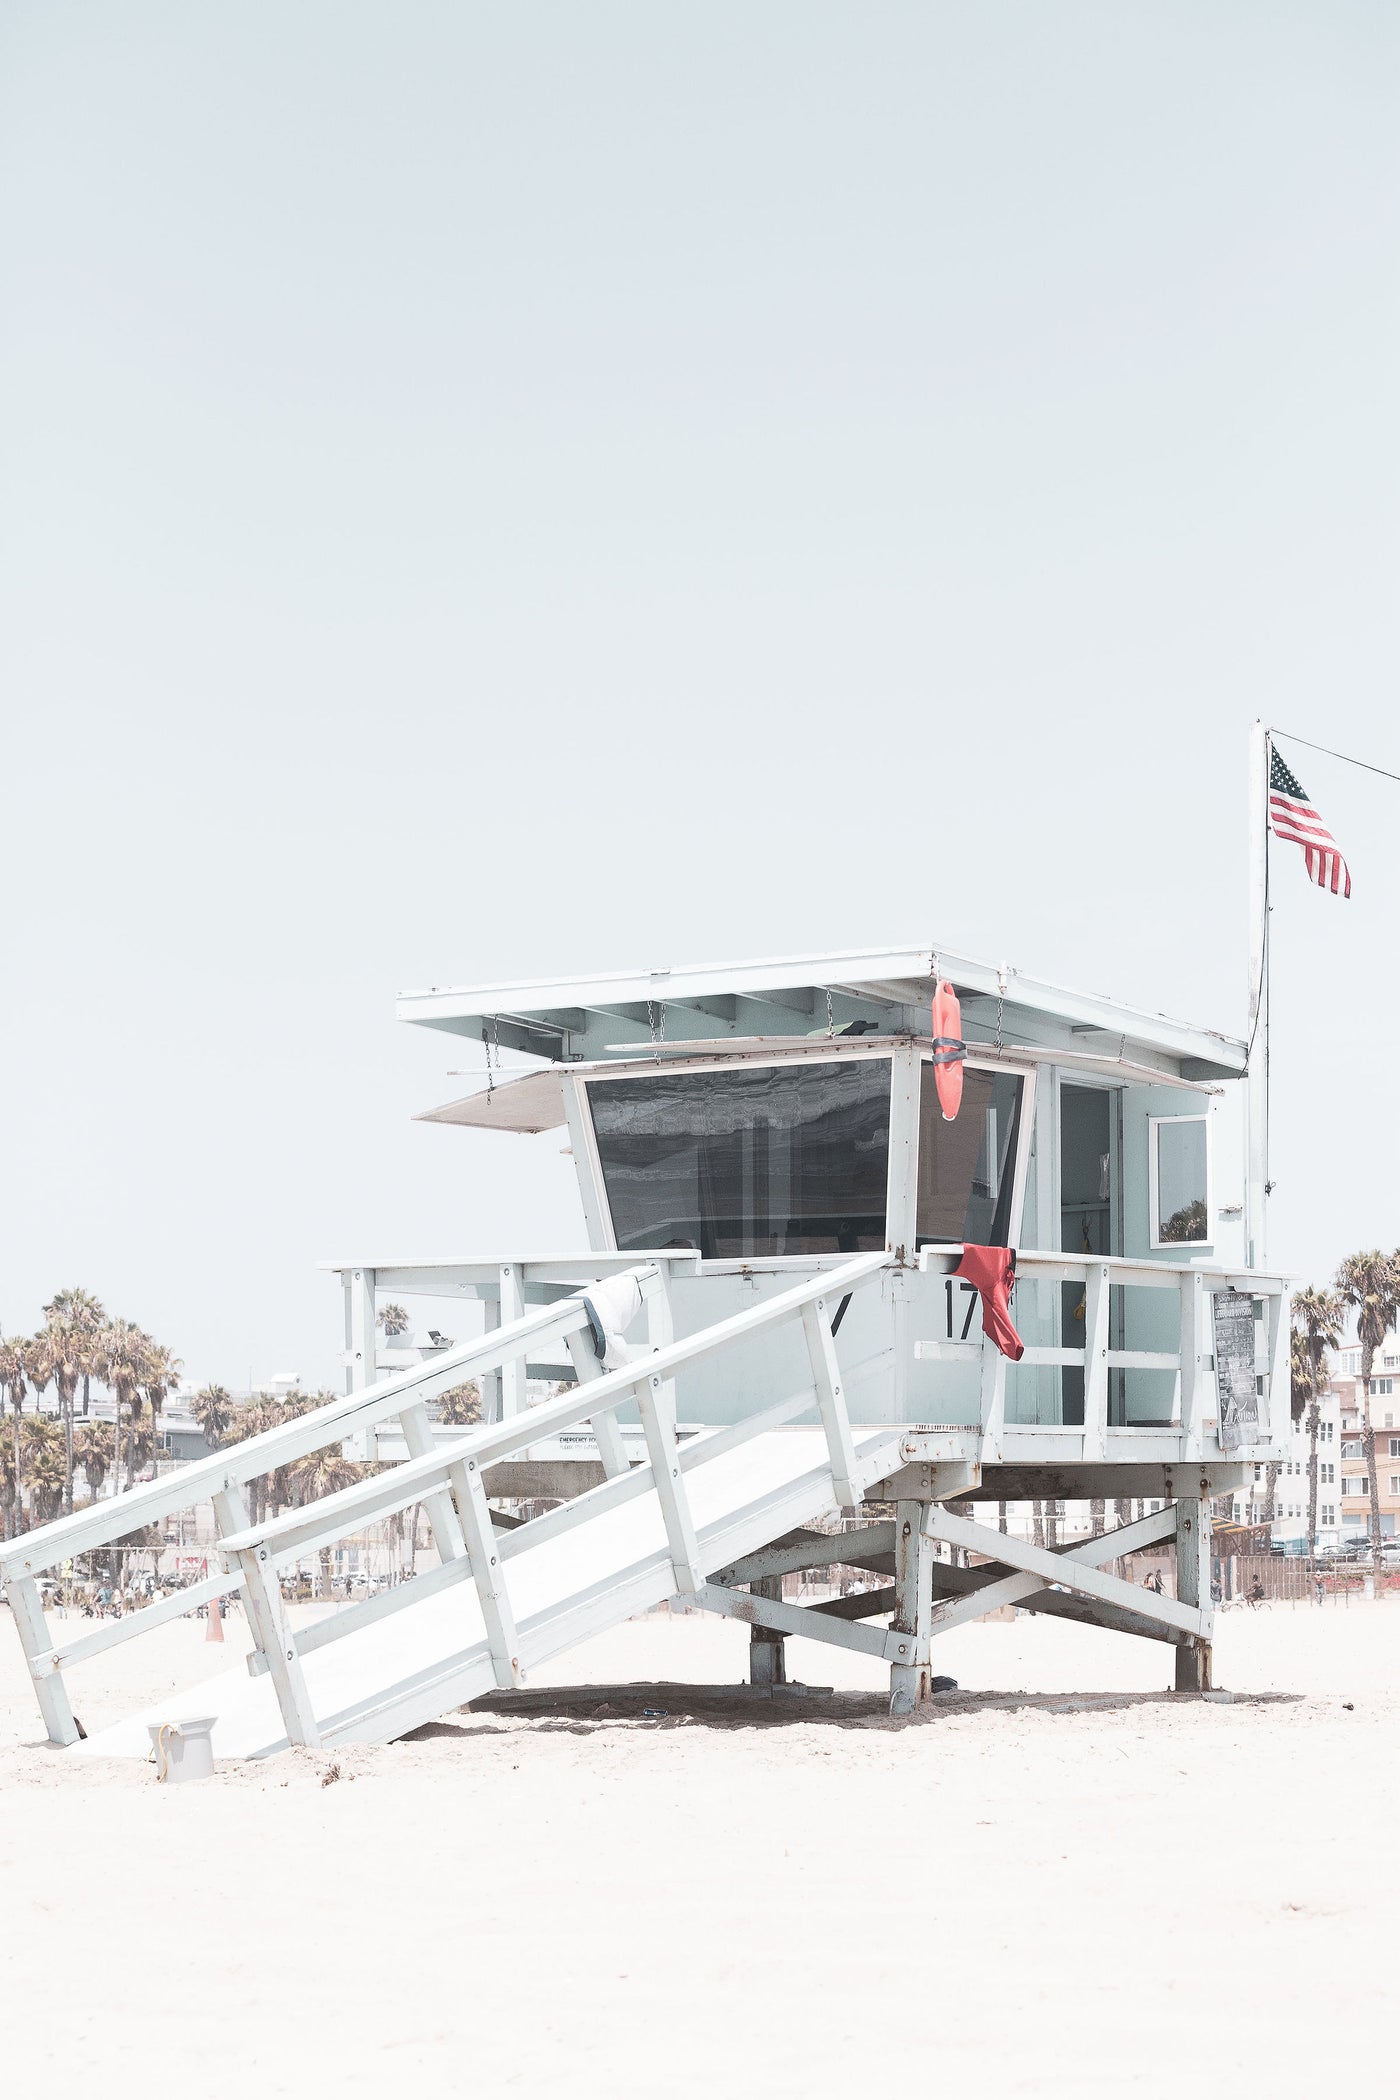 Santa Monica Lifeguard Tower